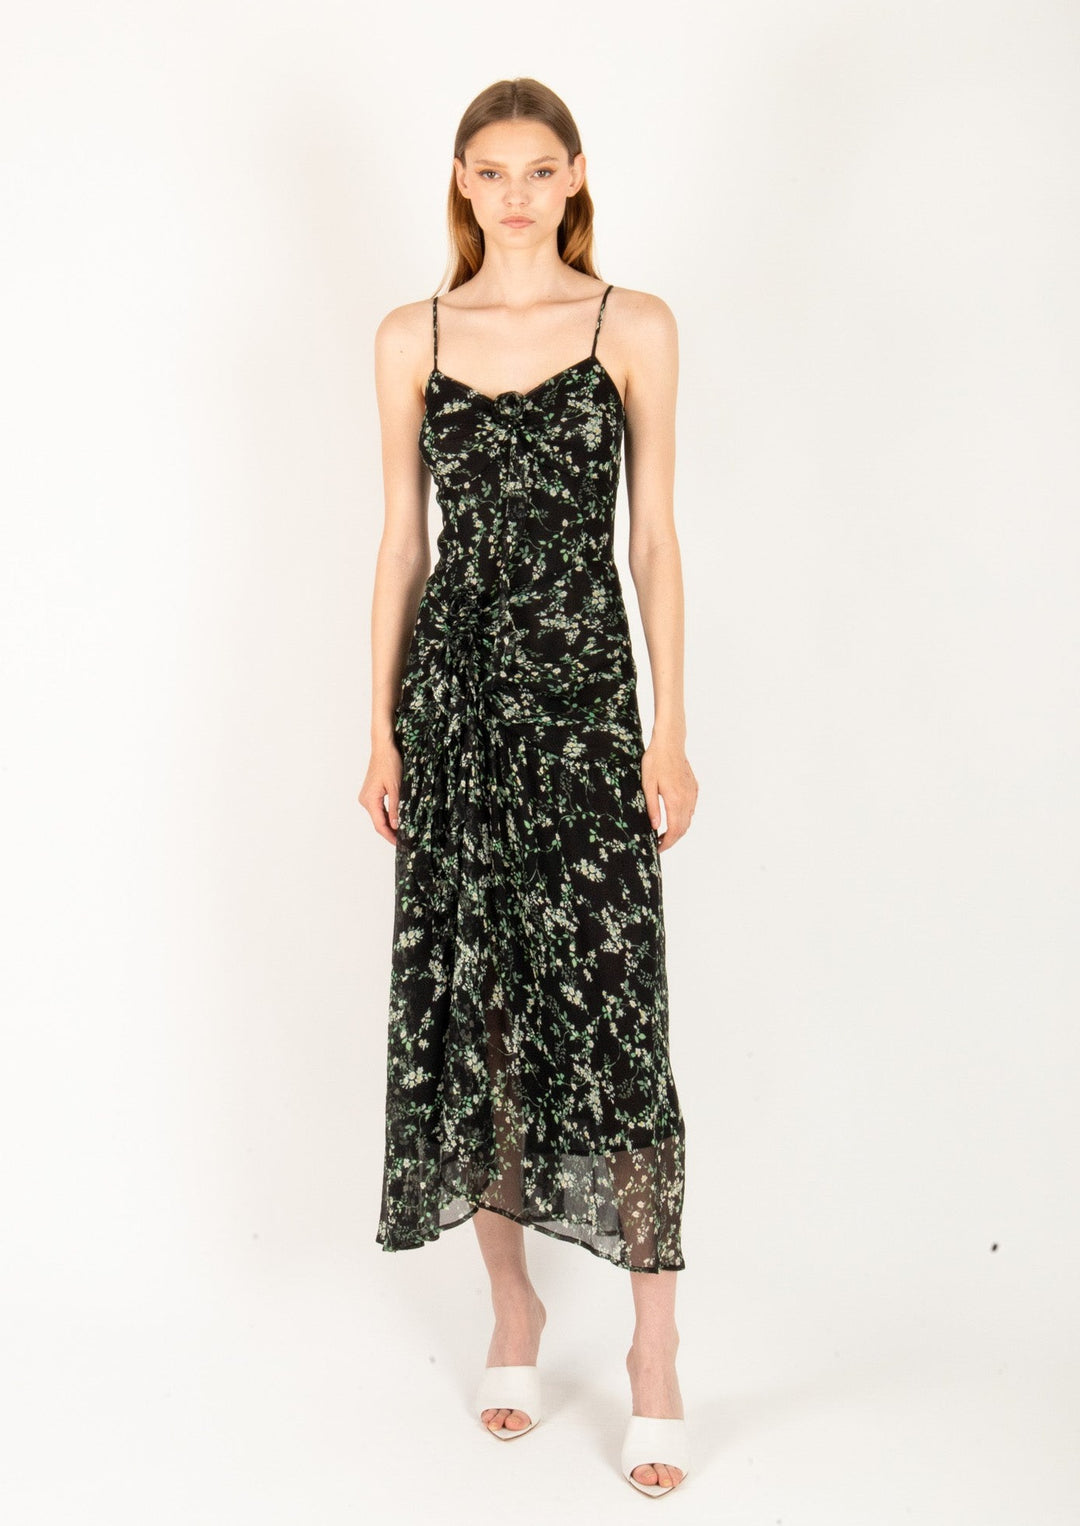 Nirai Dress - 100% Silk Chiffon